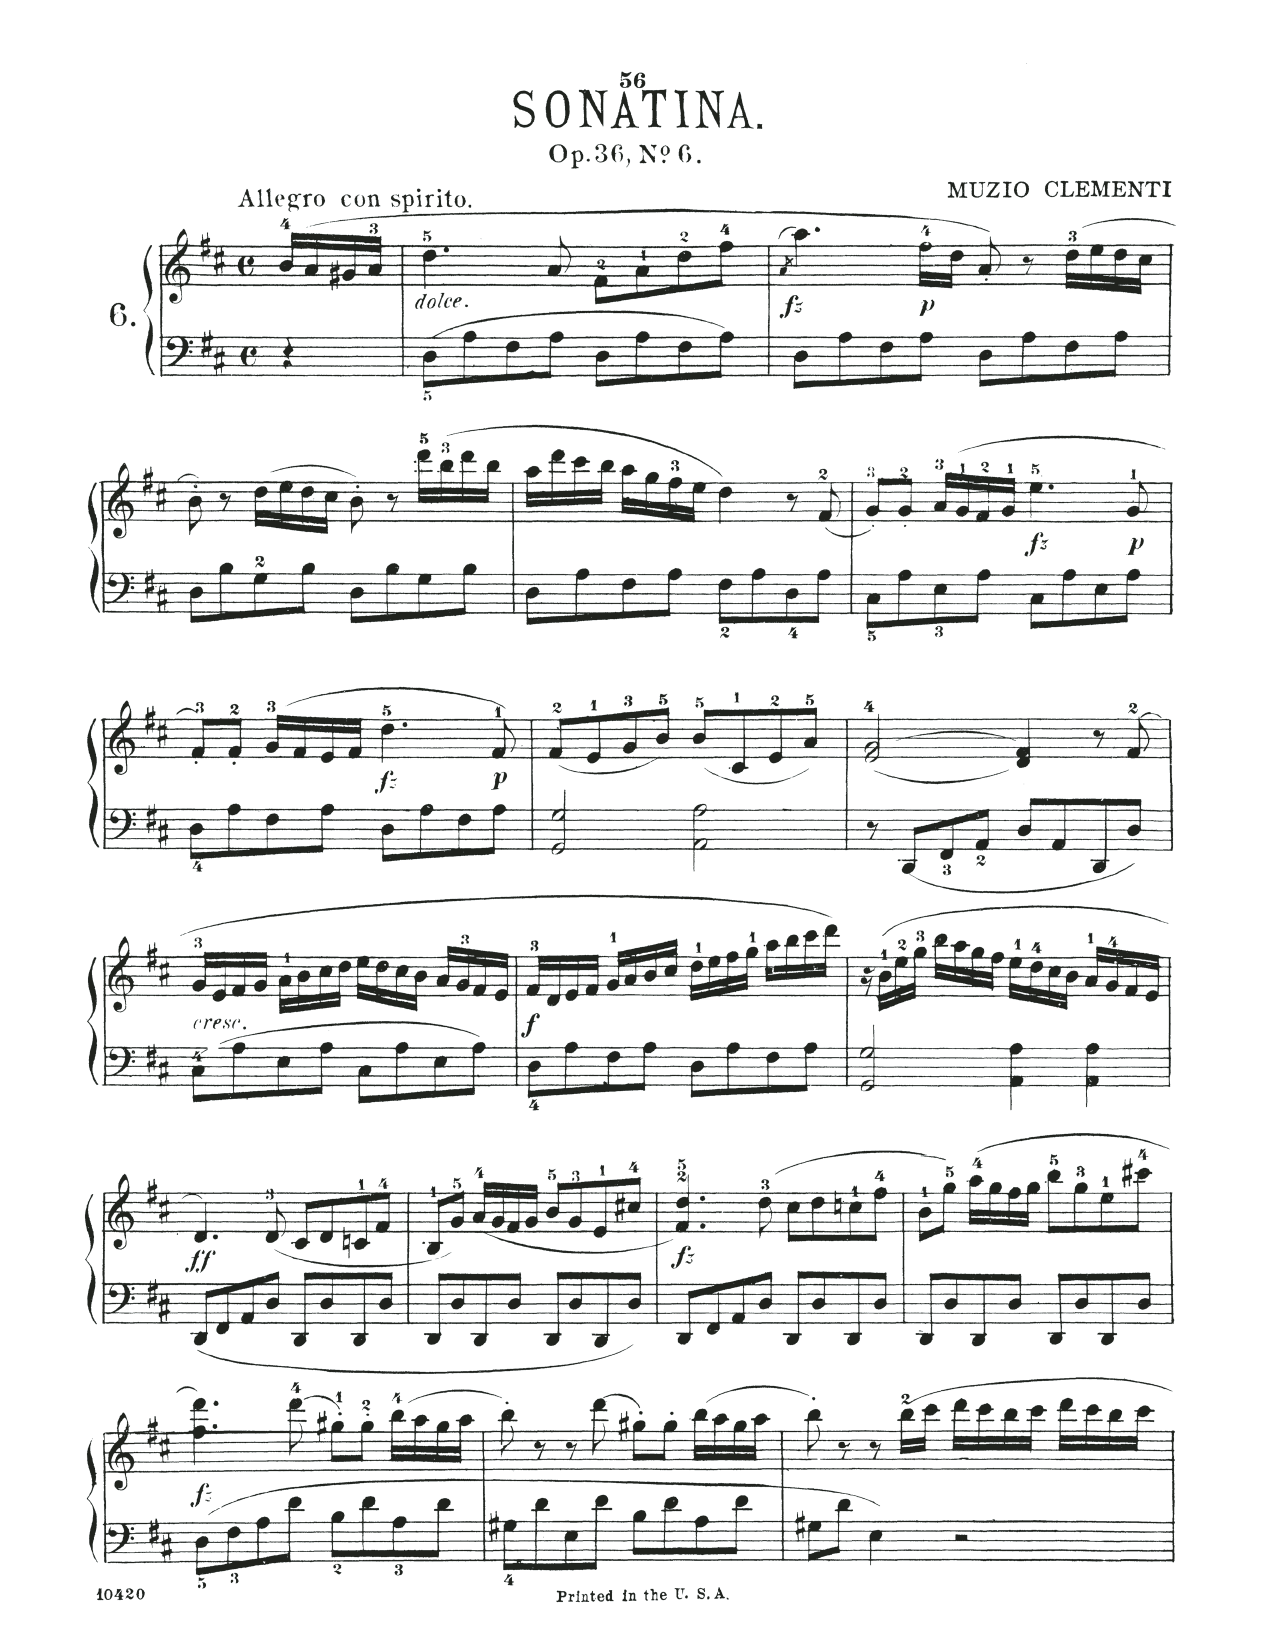 Download Muzio Clementi Sonatina In D Major, Op. 36, No. 6 Sheet Music